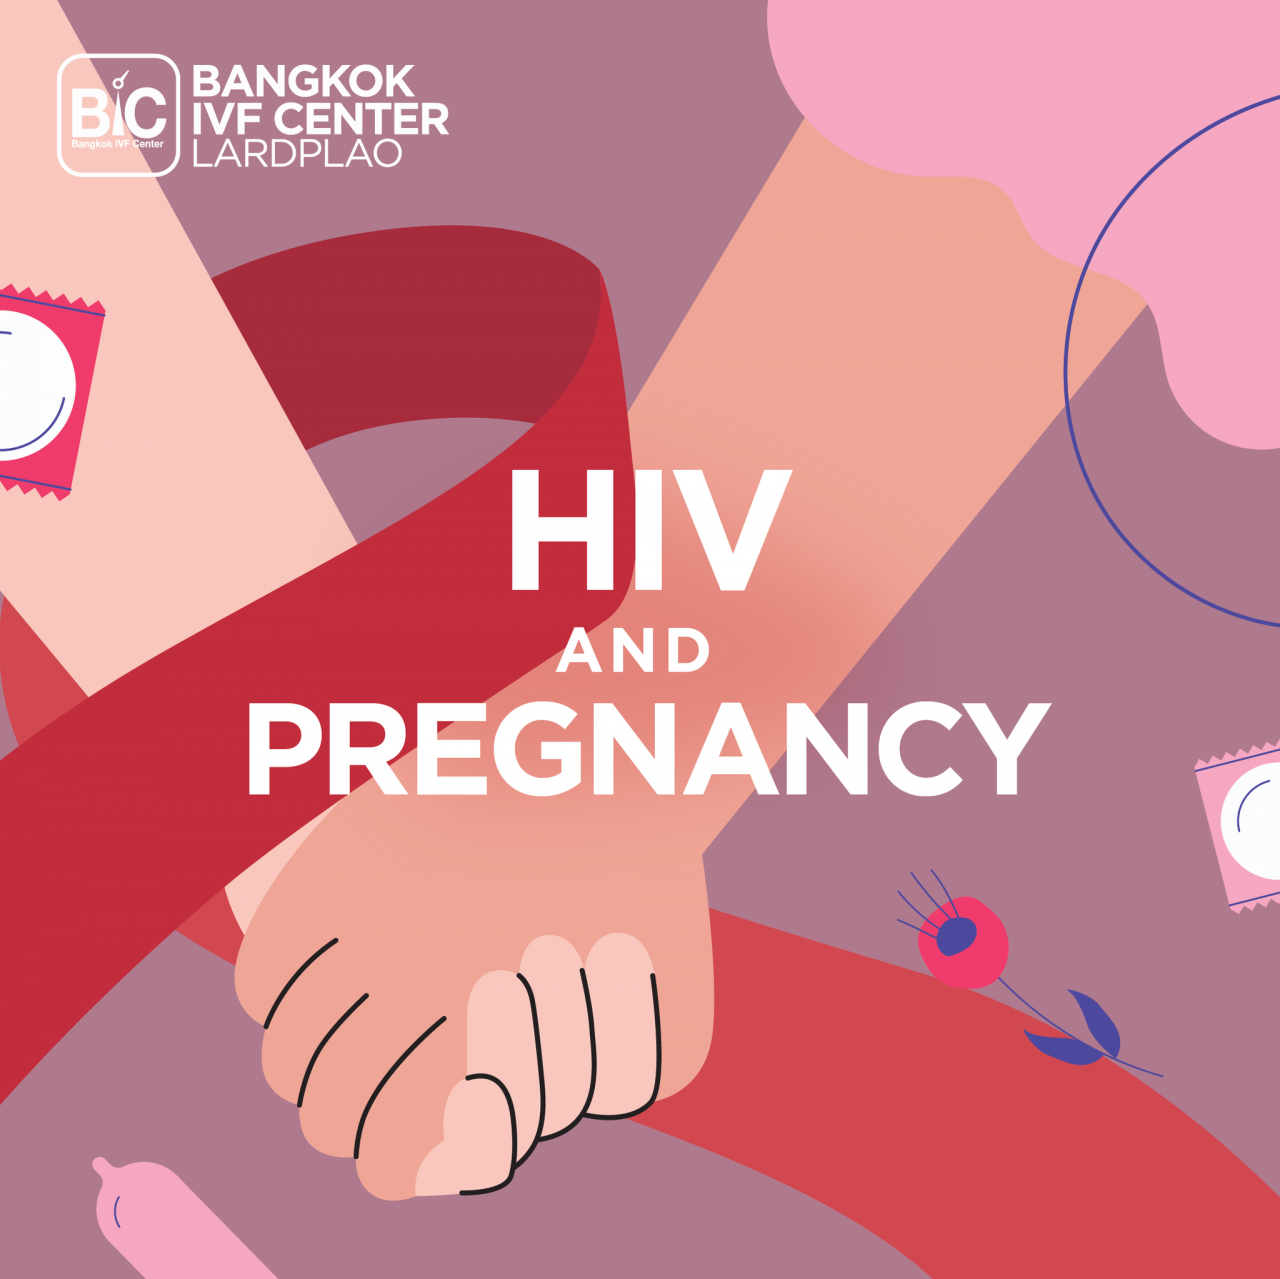 Bangkok IVF Center - BIC - หลาย ๆ คนน่าจะสงสัยและมีคำถาม เกี่ยวกับ ผู้ที่มีเชื้อเอชไอวี จะสามารถมีลูกได้ โดยที่ลูกปลอดภัยปราศจากเชื้อได้หรือไม่